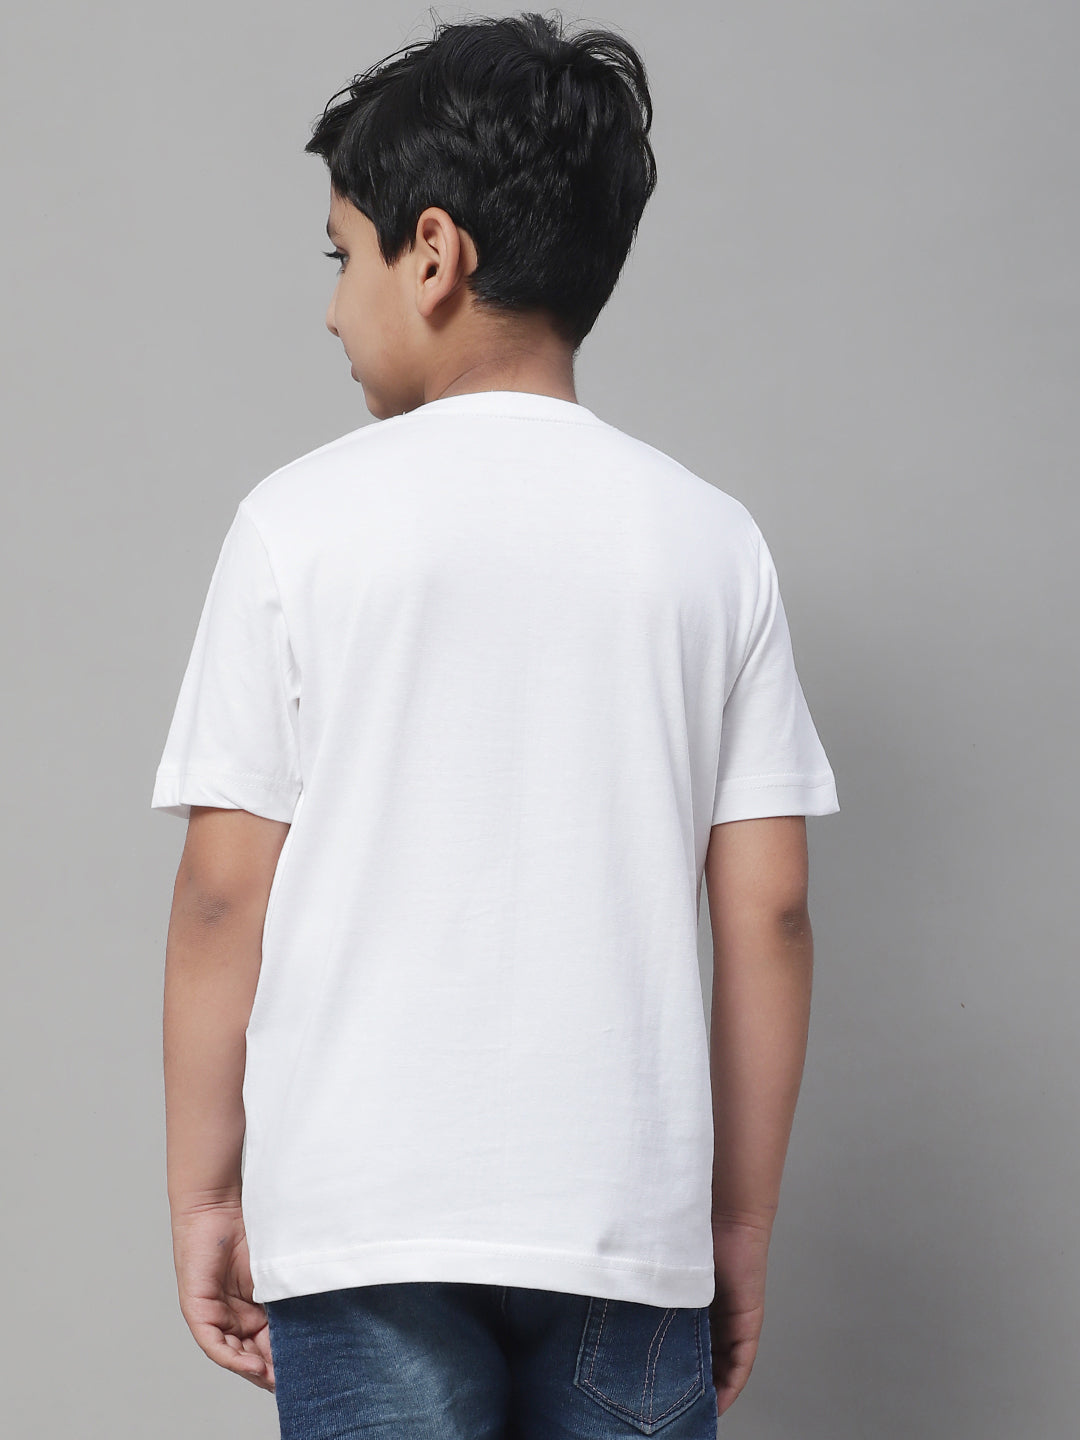 Boys Cool Half Sleeves Printed T-Shirt - Friskers